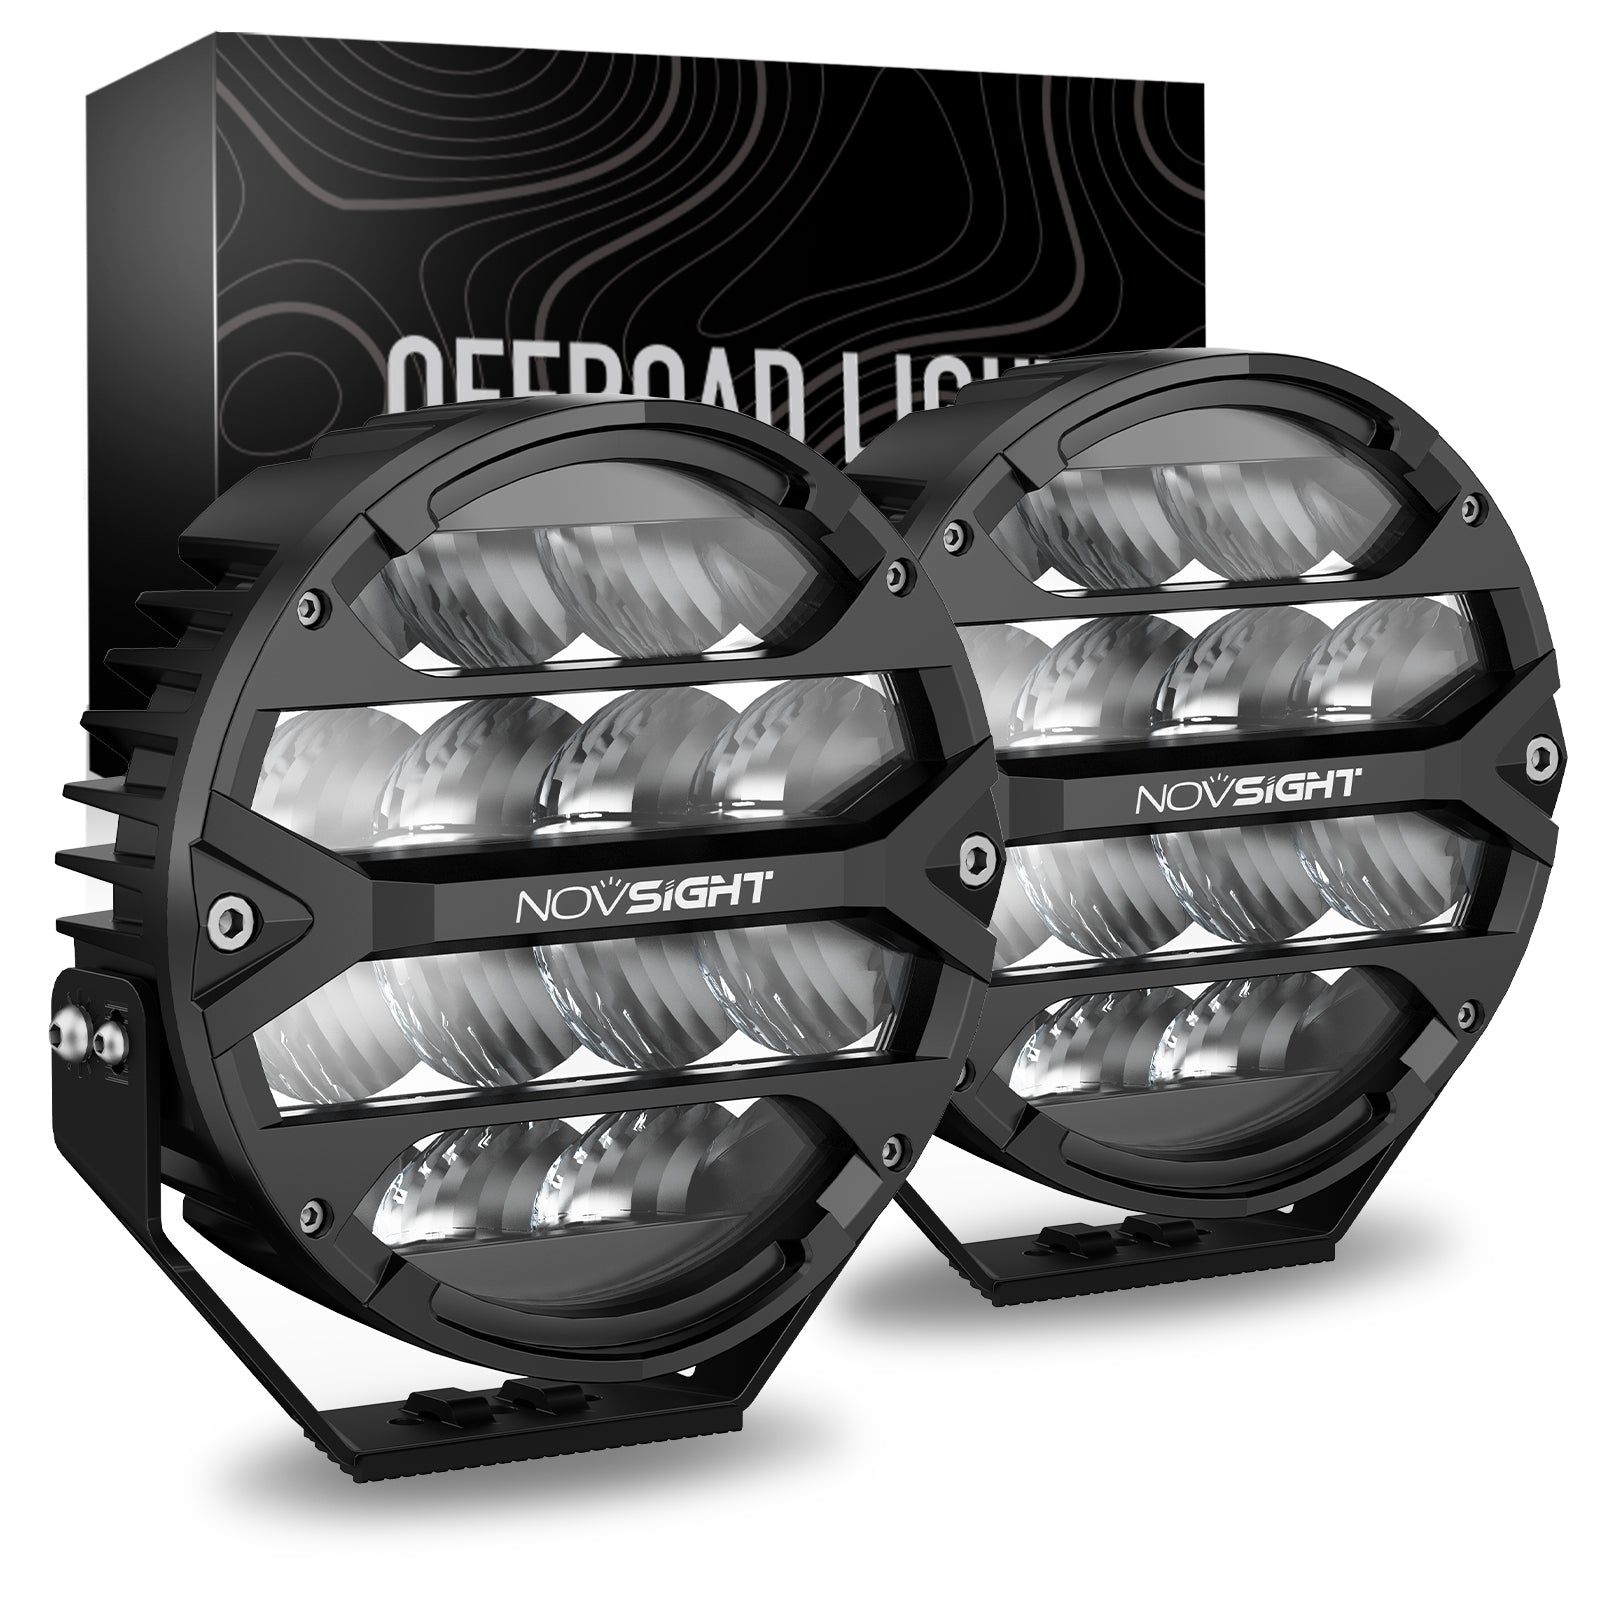 Rock Series | 9-inch LED Pod Round Lights Diving Lights